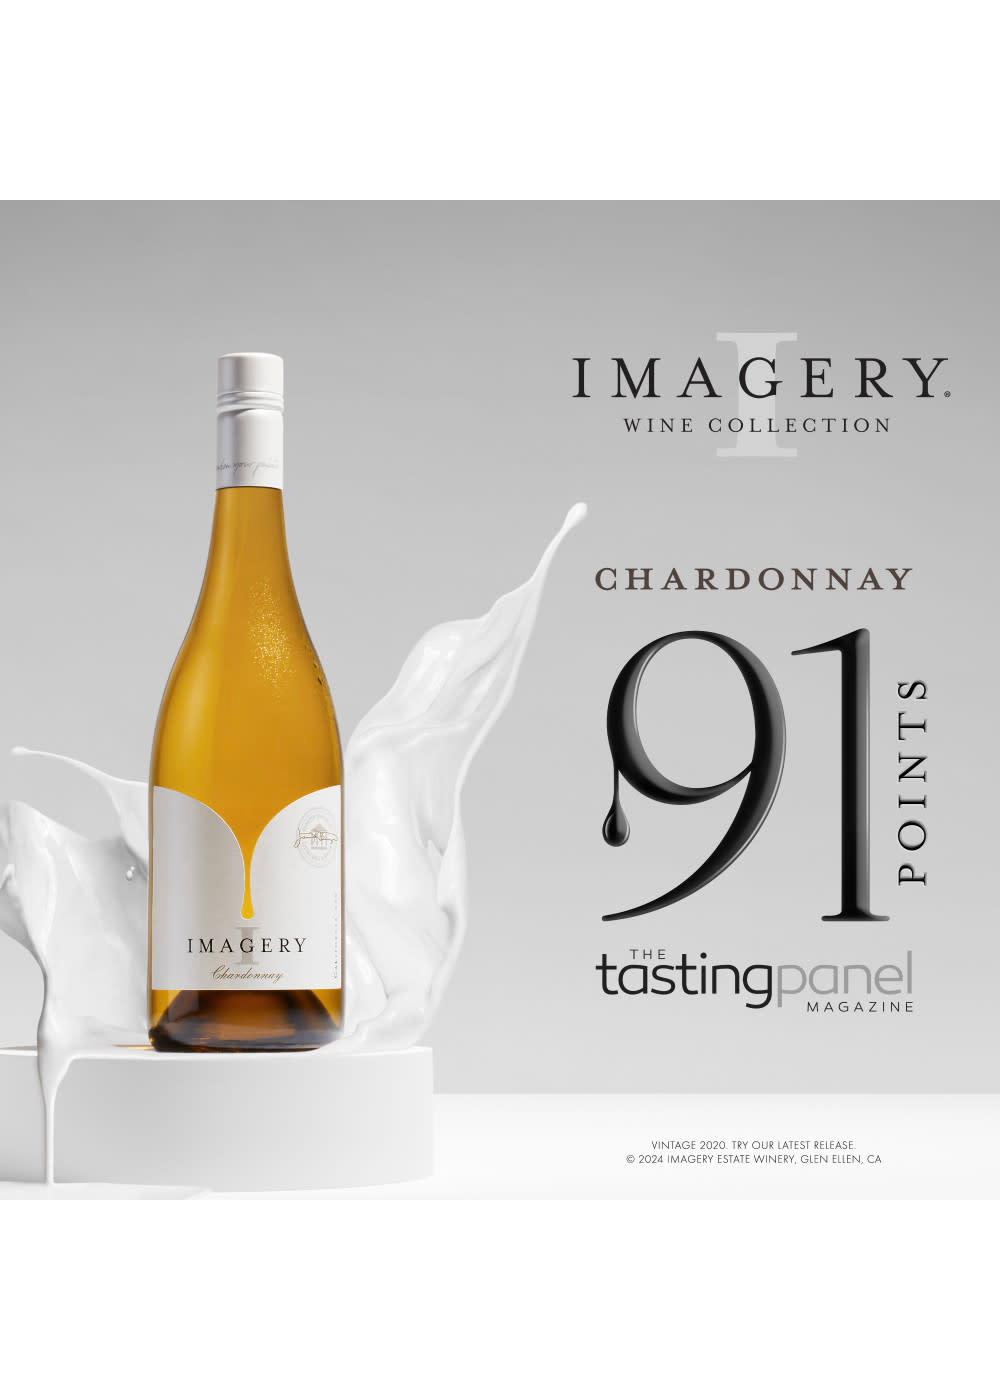 Imagery Chardonnay; image 3 of 5